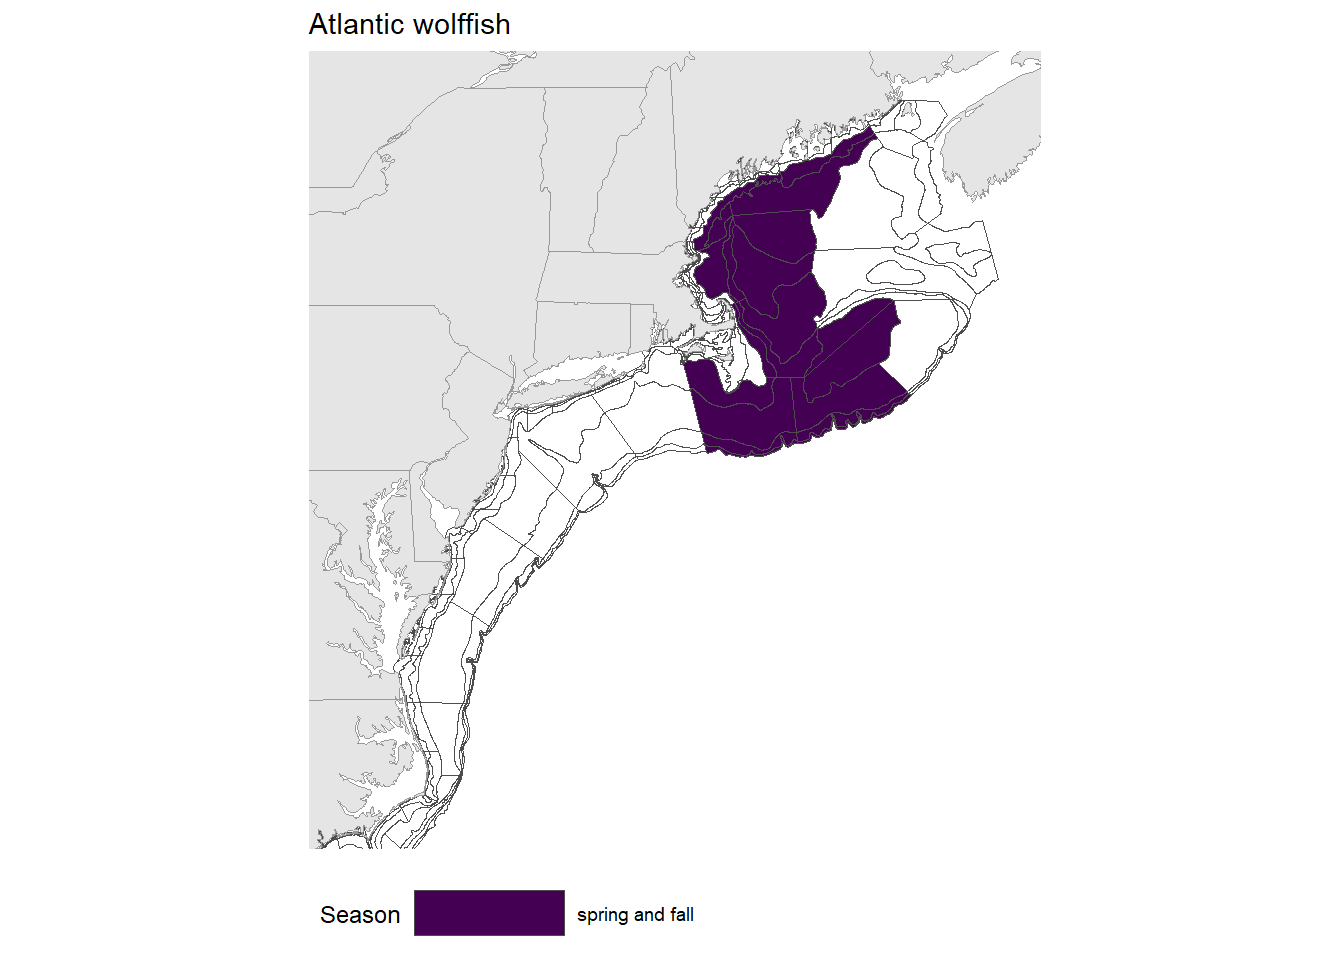 Strata map for the Atlantic wolffish (Anarhichas lupus) stock on the NE shelf.